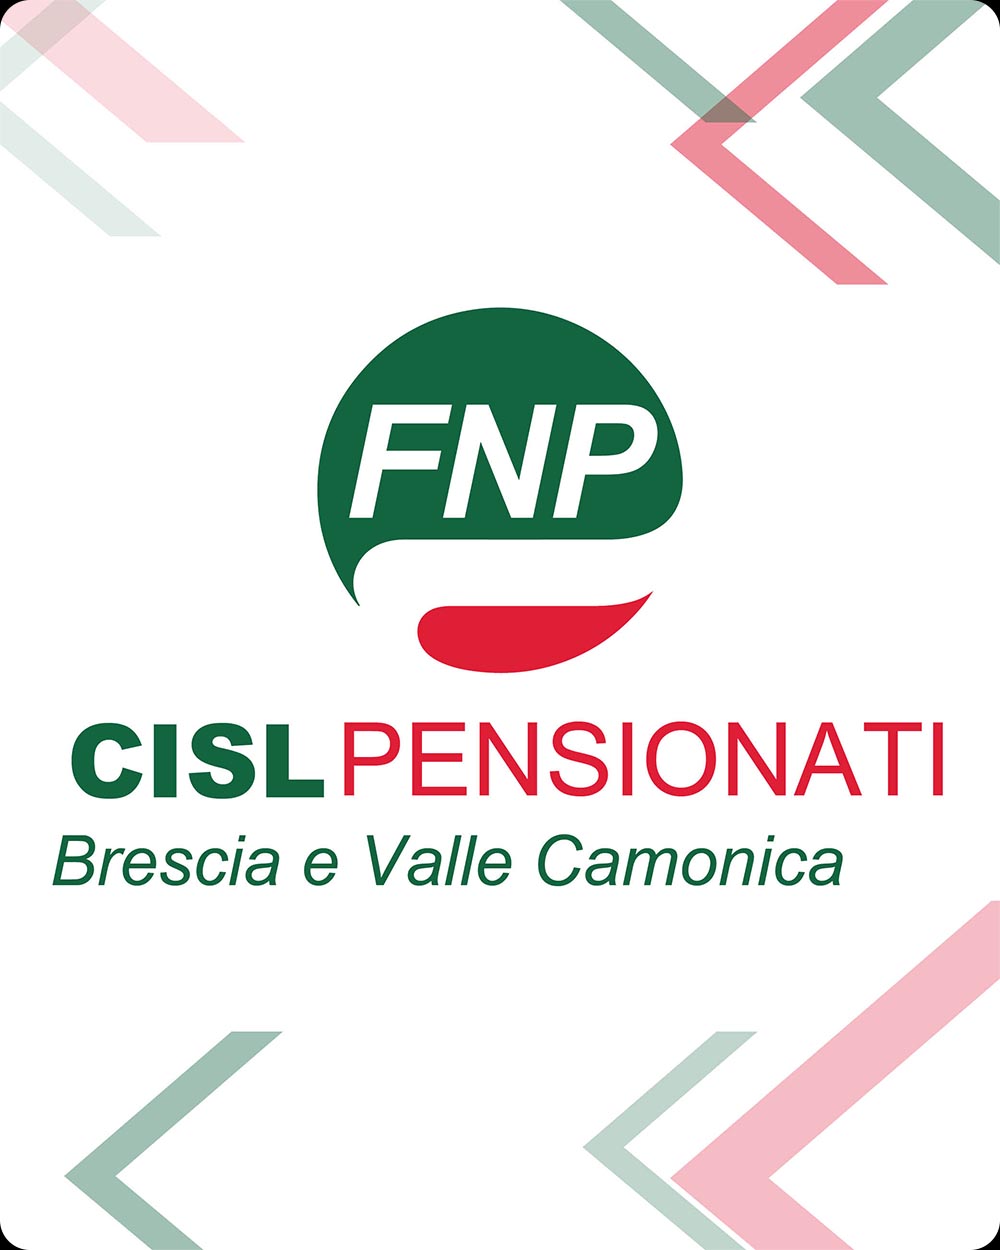 FNP Cisl Pensionati